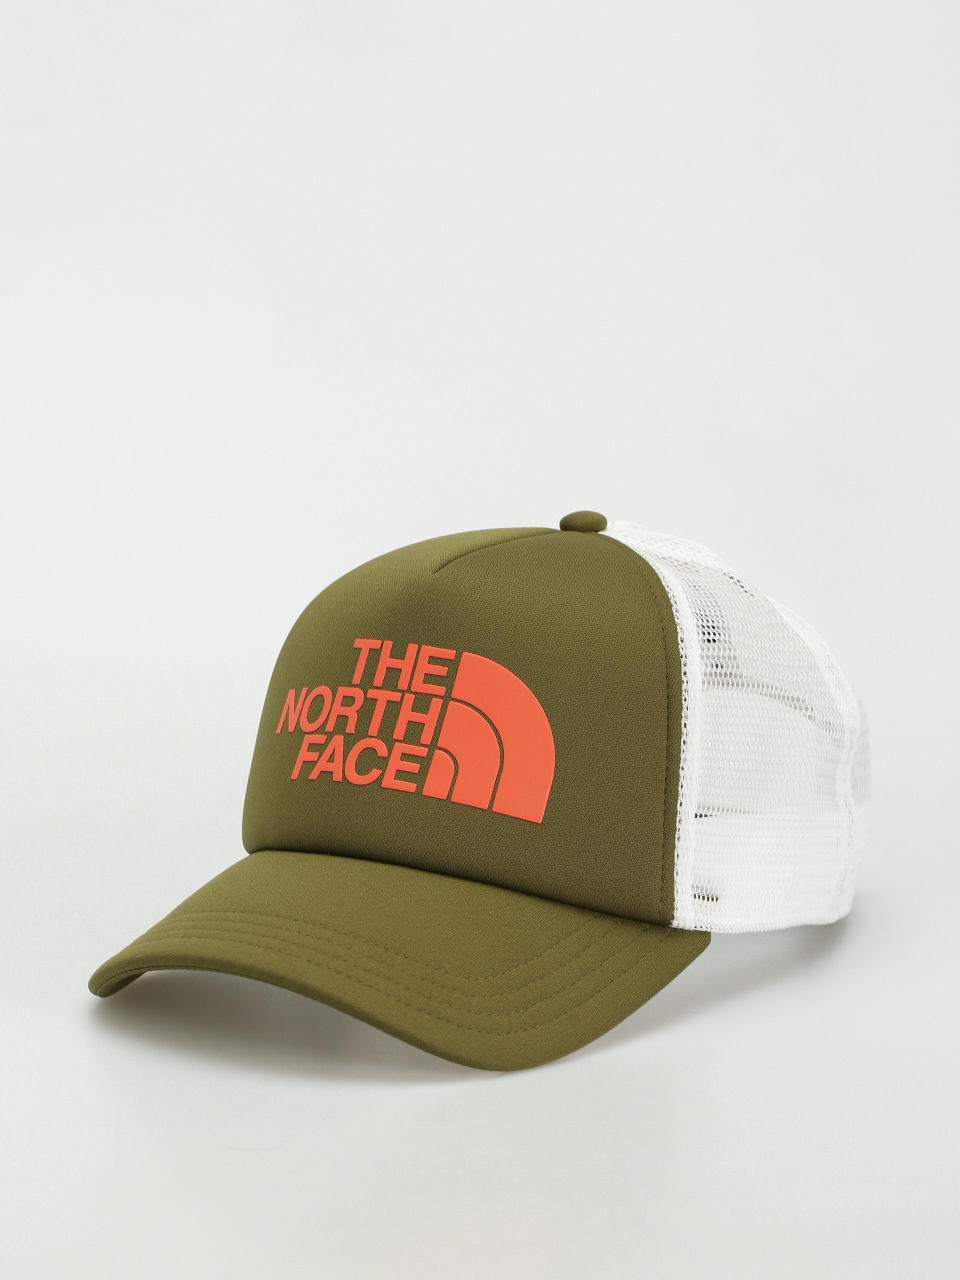 The North Face Tnf Logo Trucker Cap (forest olive/tnf orange)